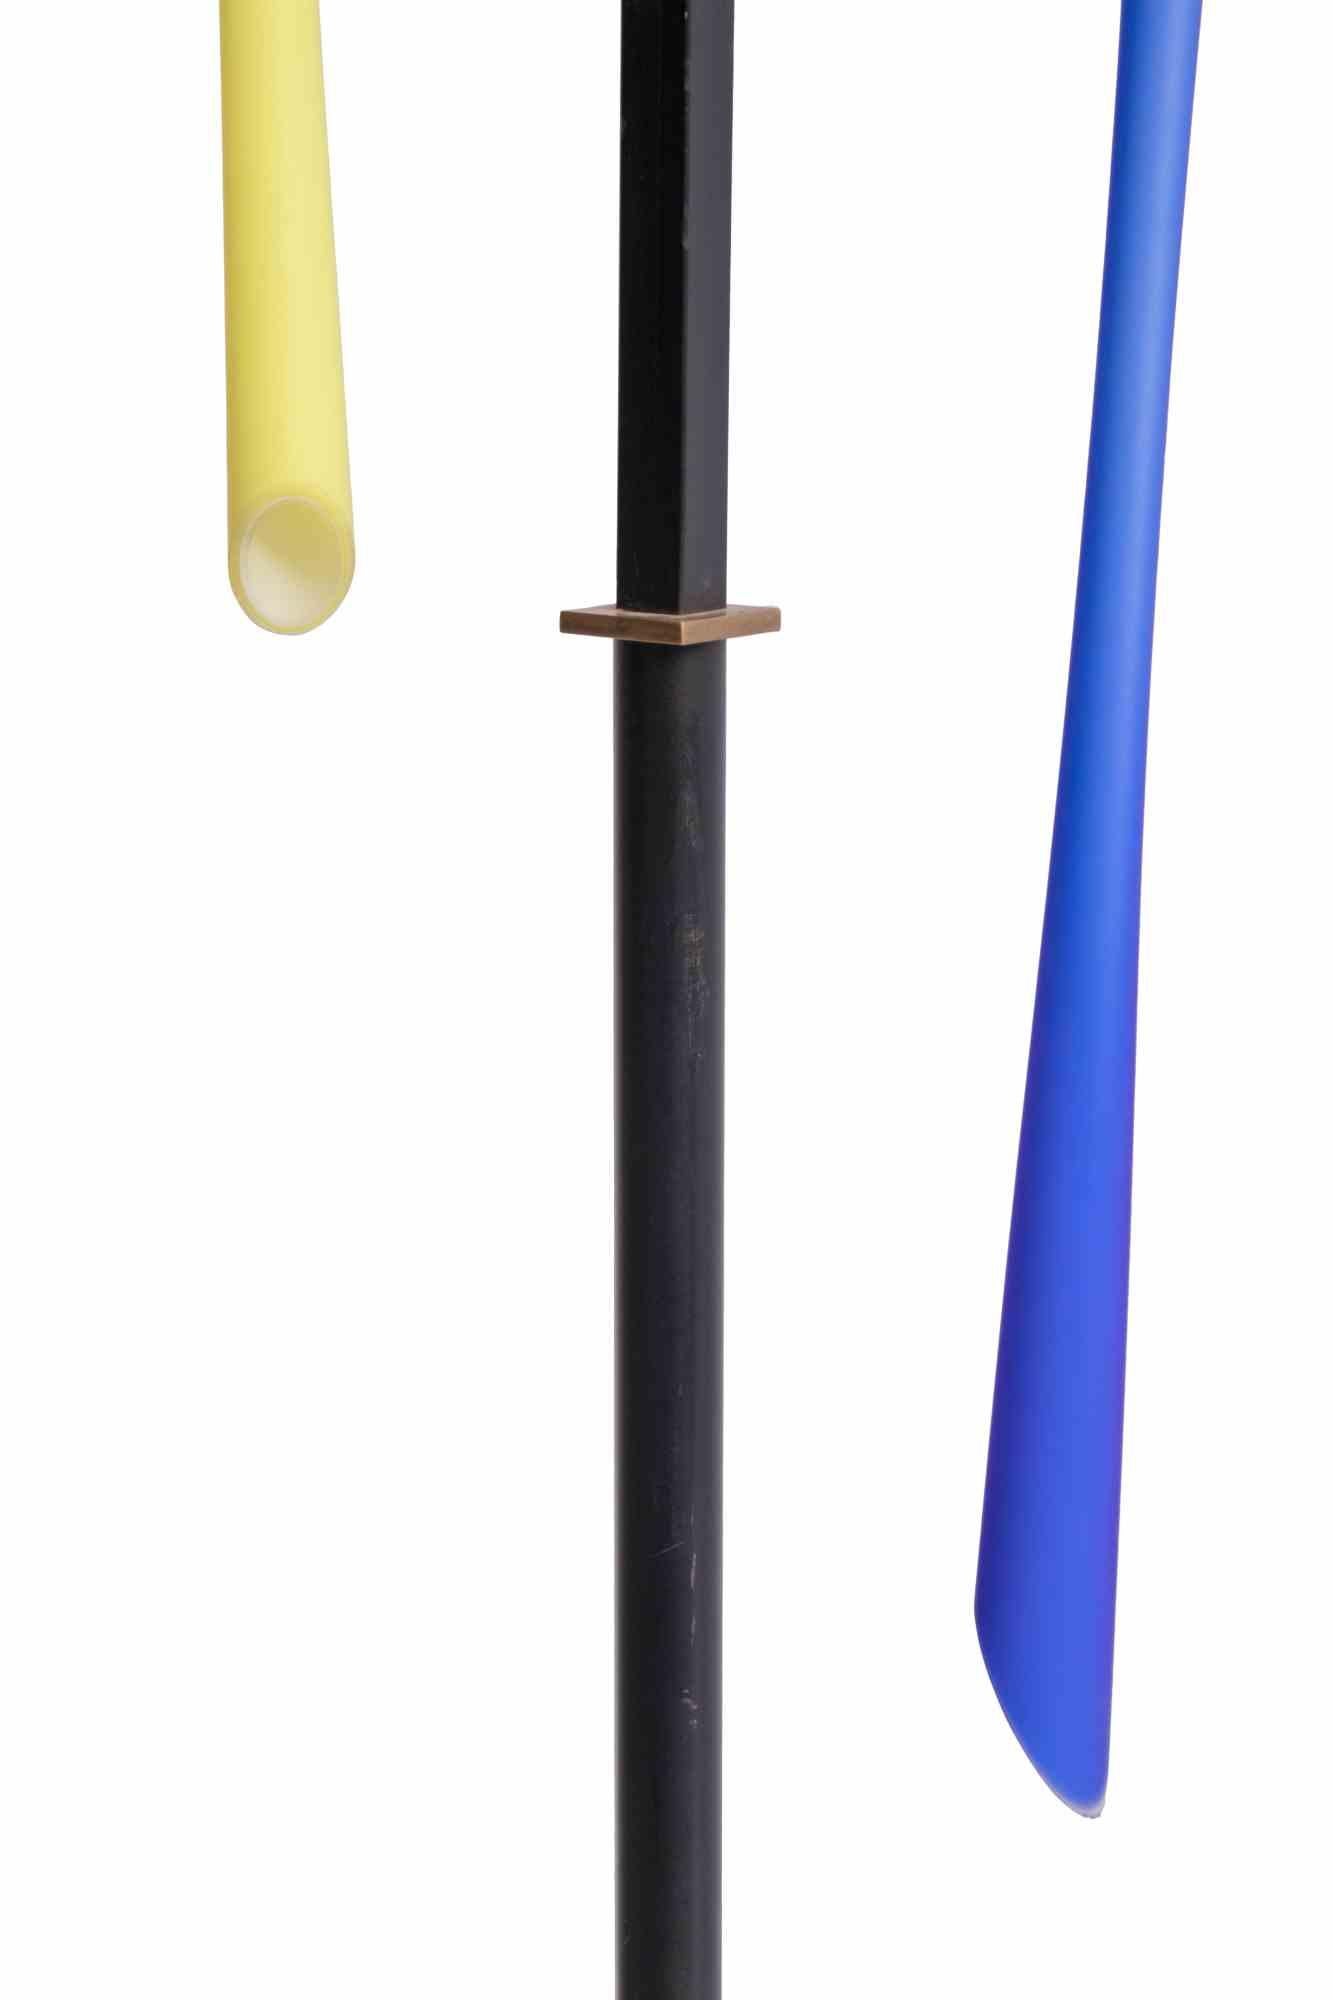 Italian Yellow and Blue Stilnovo Lamp, Mid-20th Century For Sale